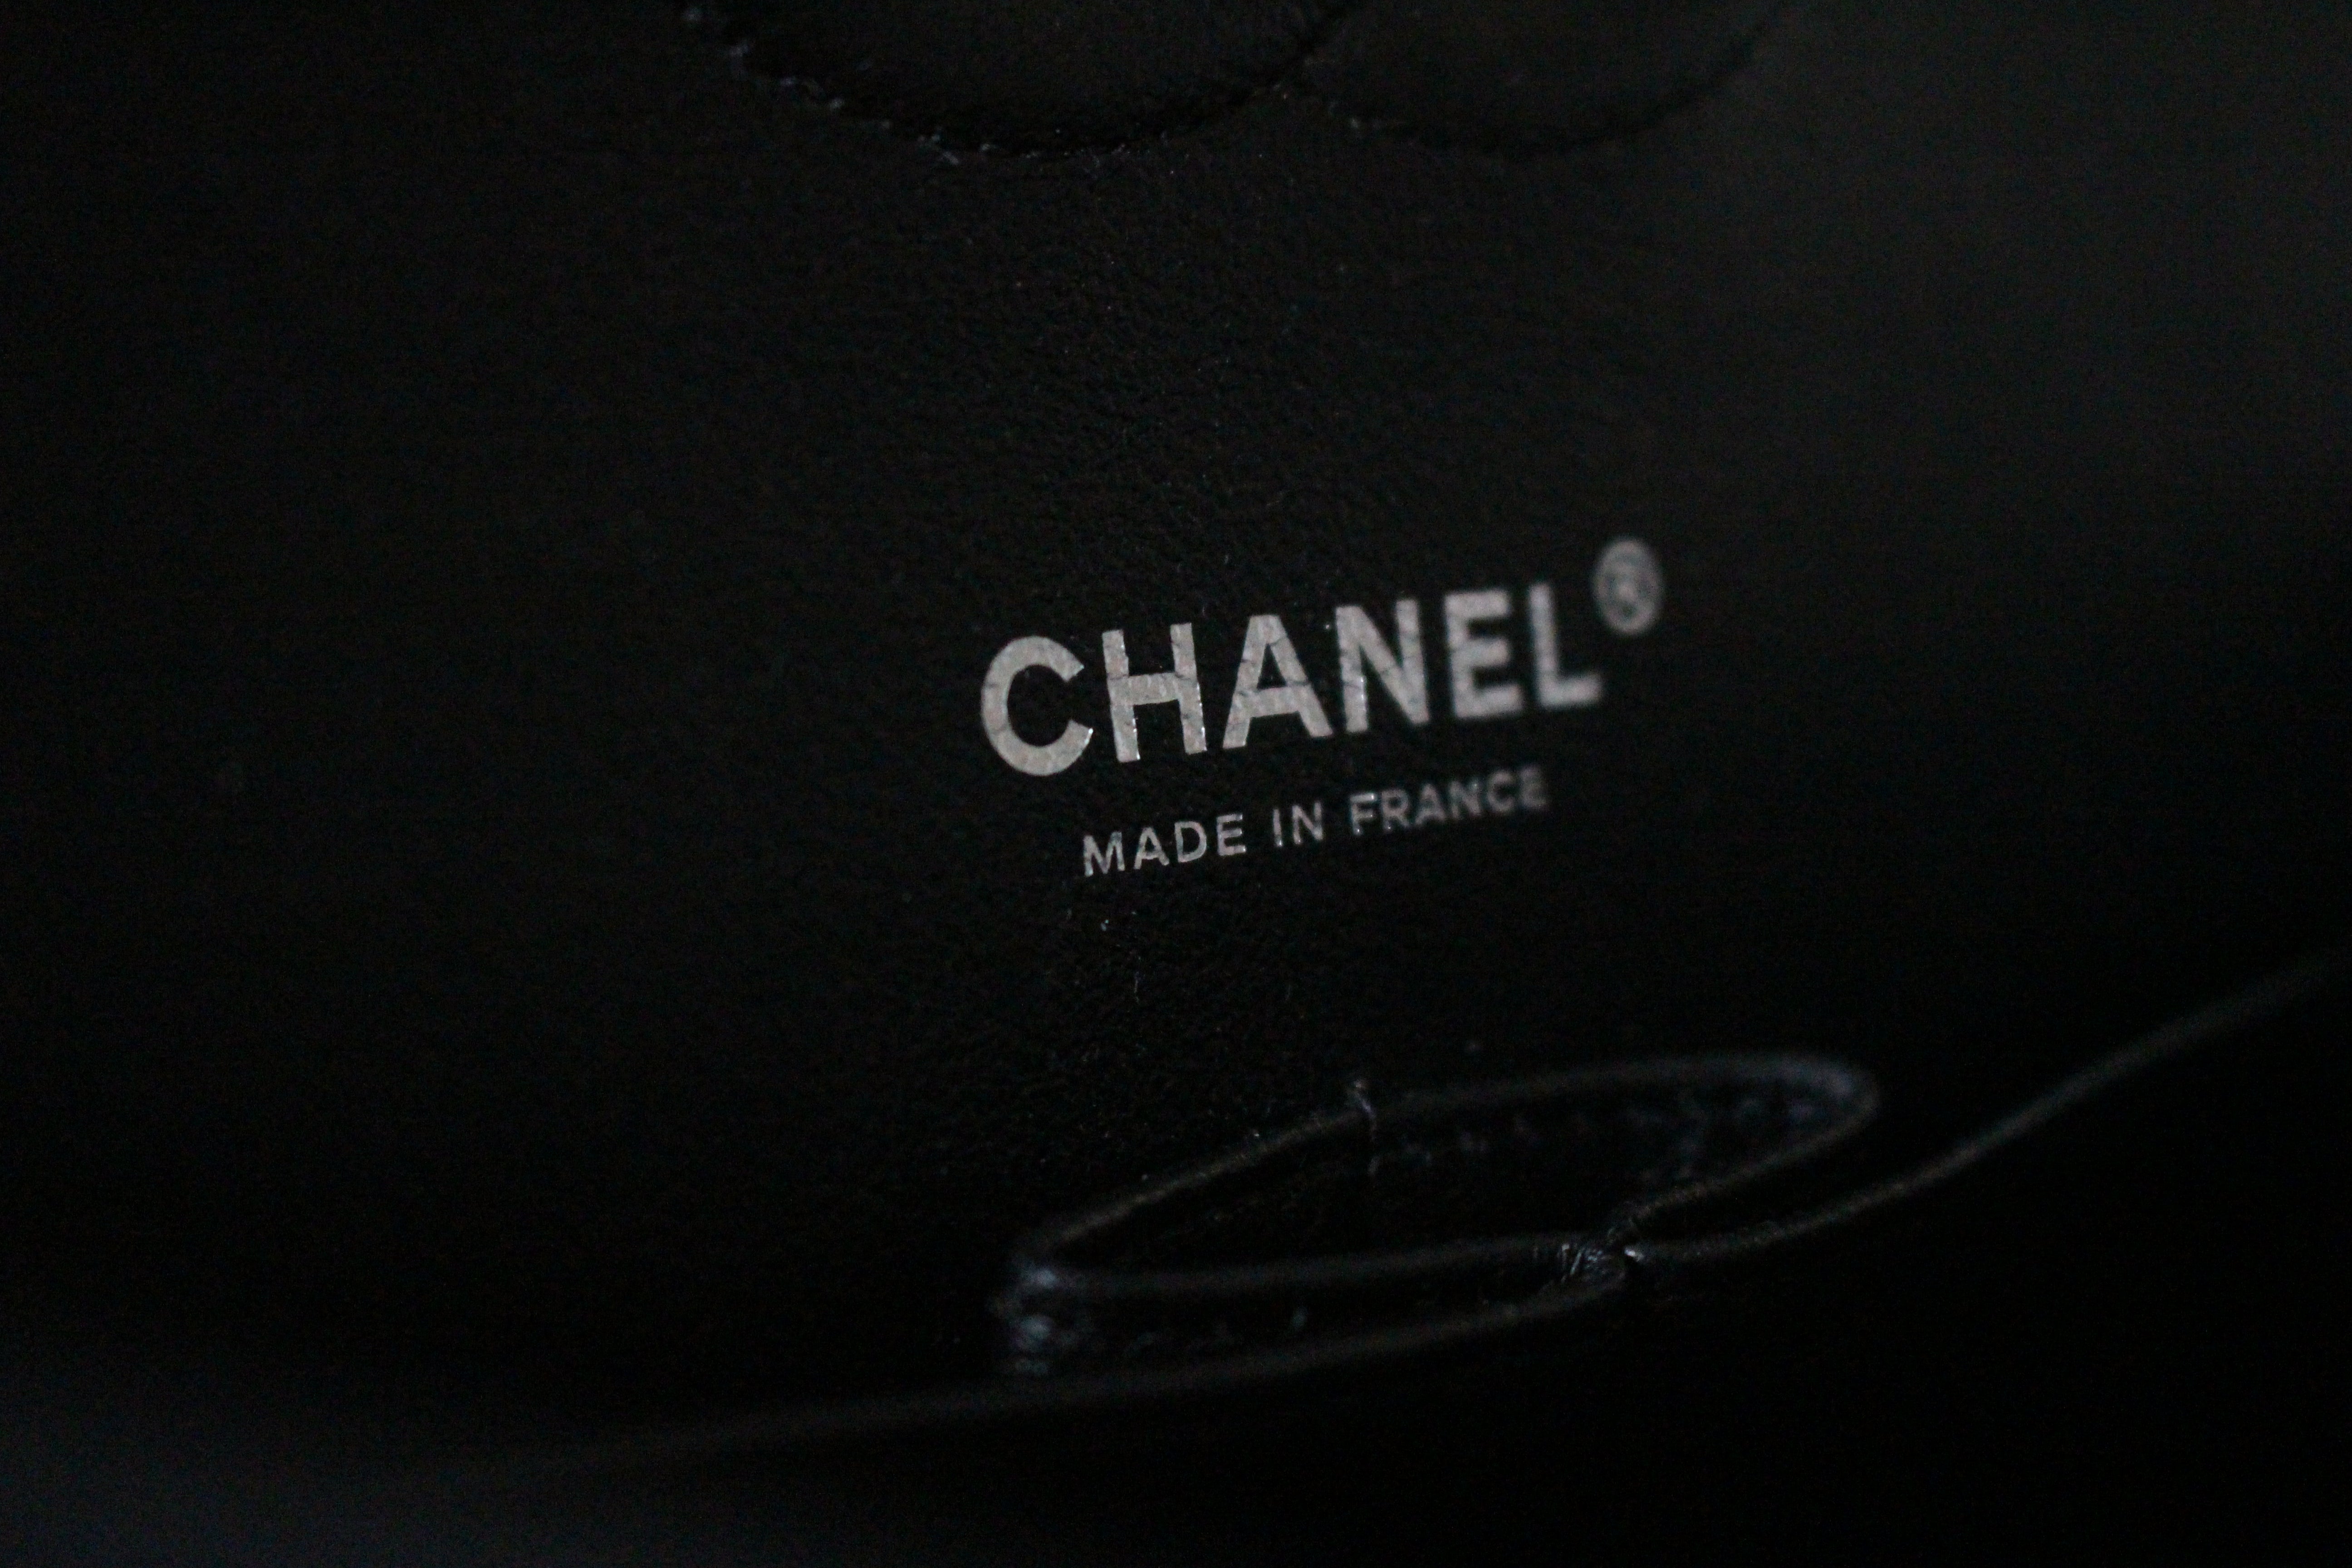 Chanel19 Organizer